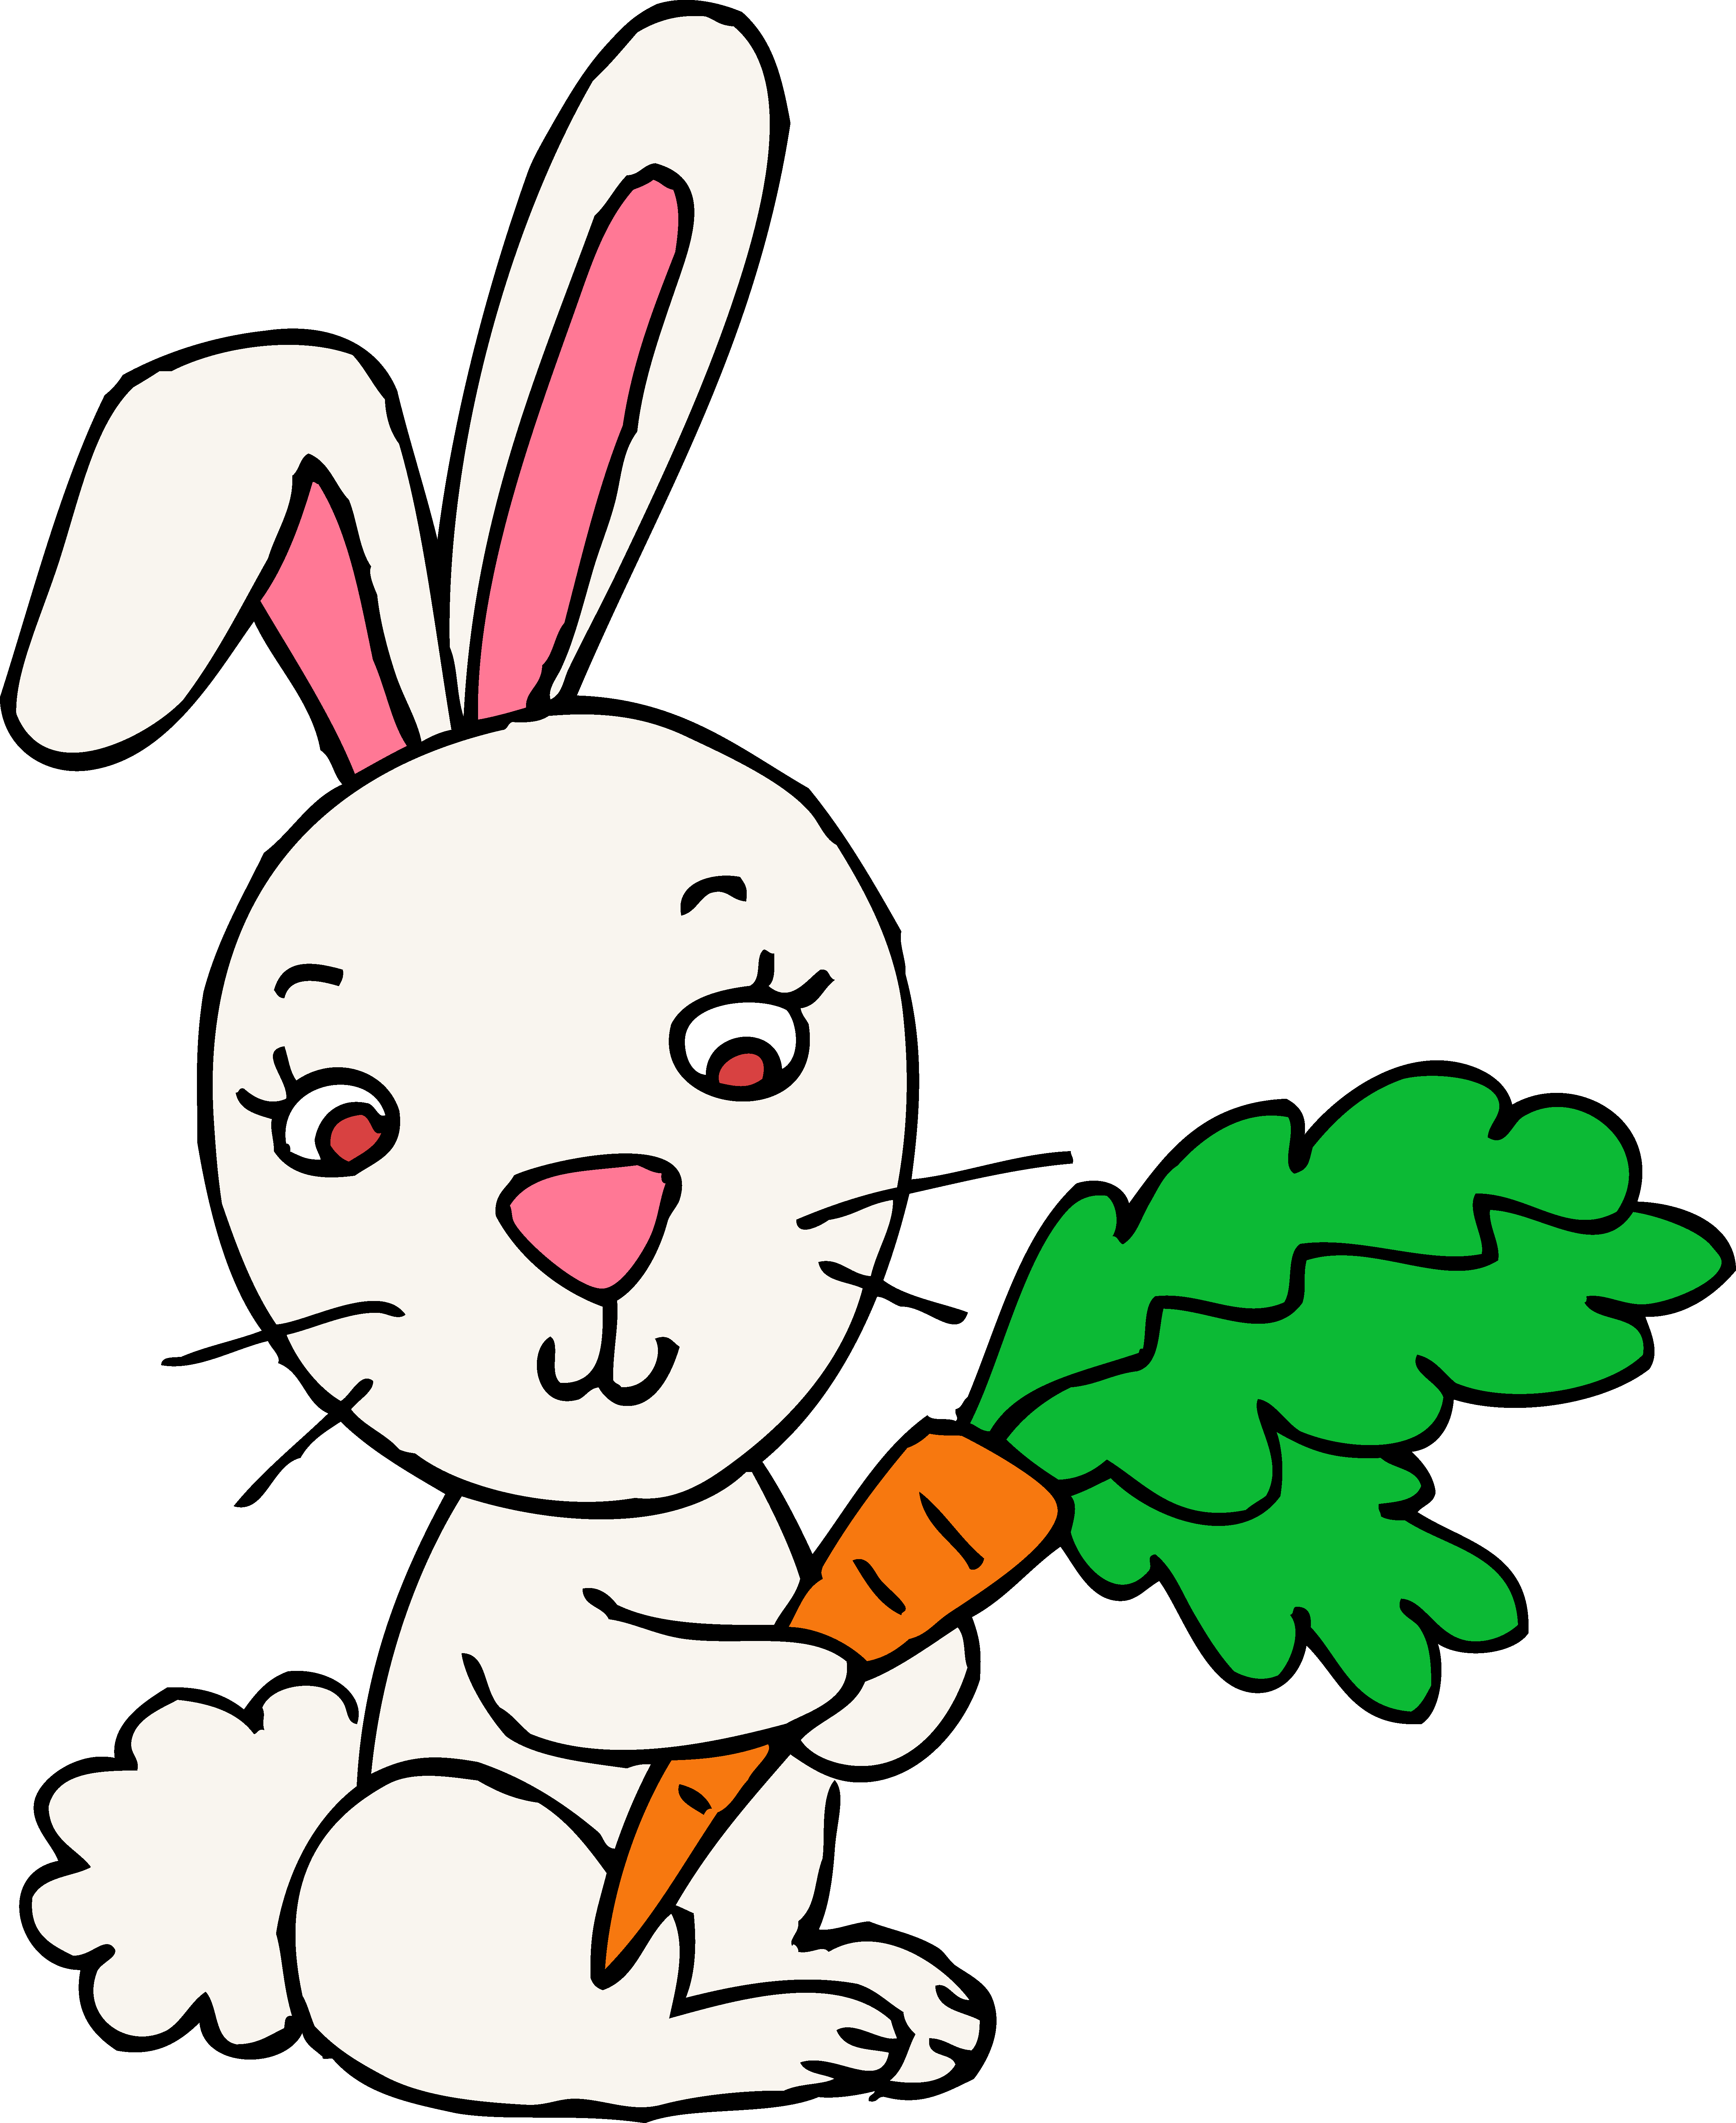 White Rabbit Clip Art - Cliparts.co